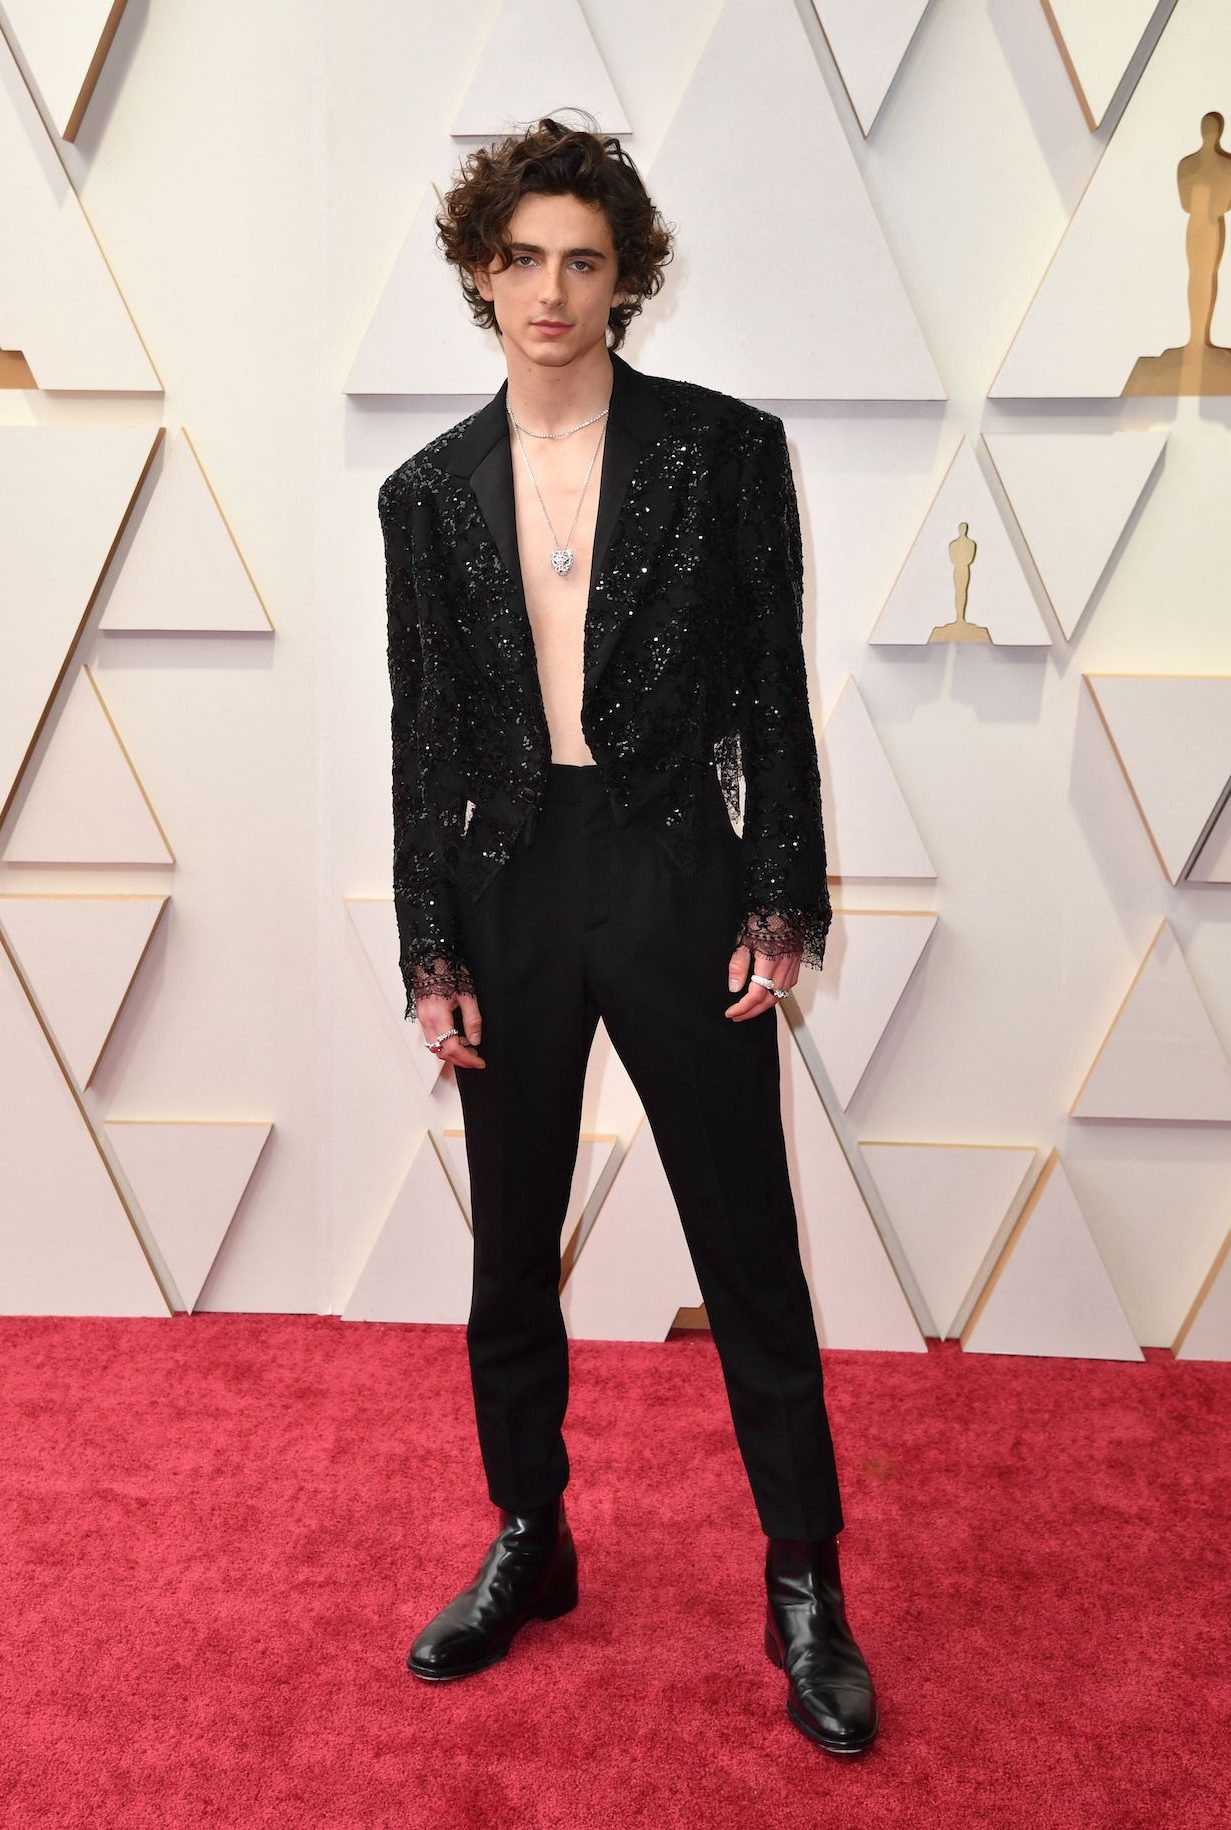 Timothée Chalamet Fans on X: Timothée Chalamet on the red carpet tonight  at the #Oscars  / X